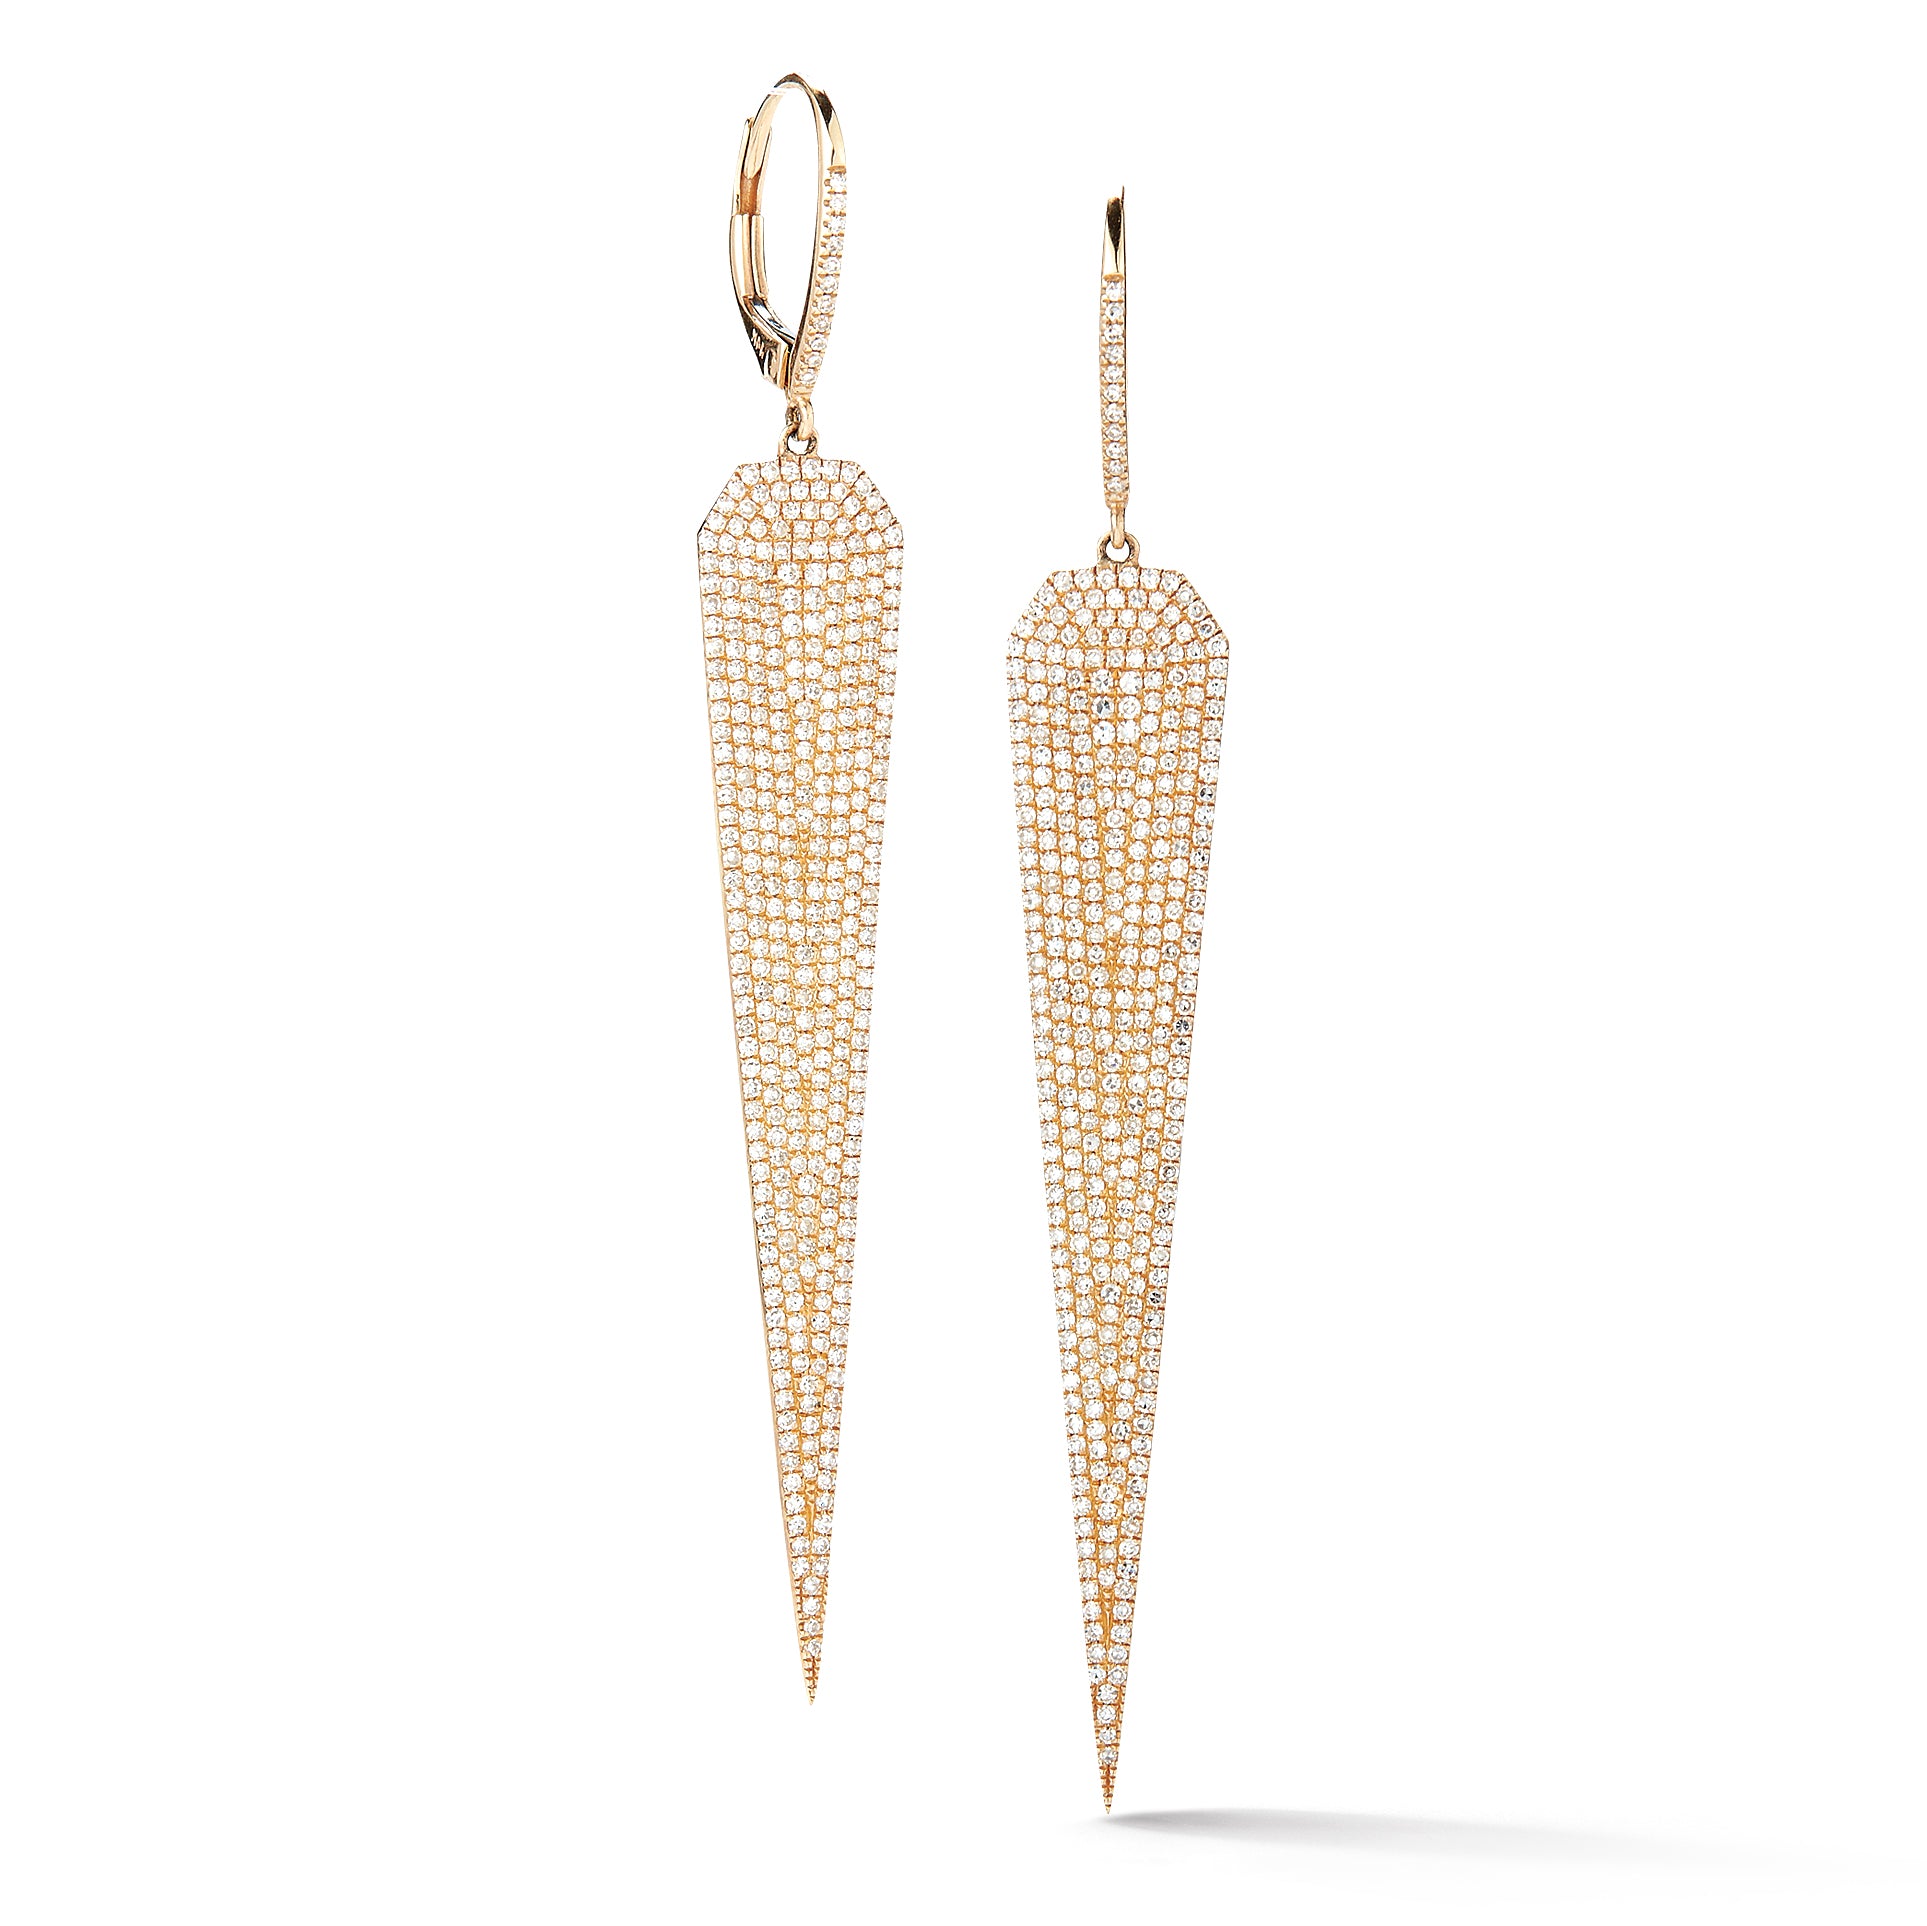 Pave-set Diamond Dagger Earrings  14kt gold, 4.85 grams, 528 round pave-set diamonds, 1.12 carats.